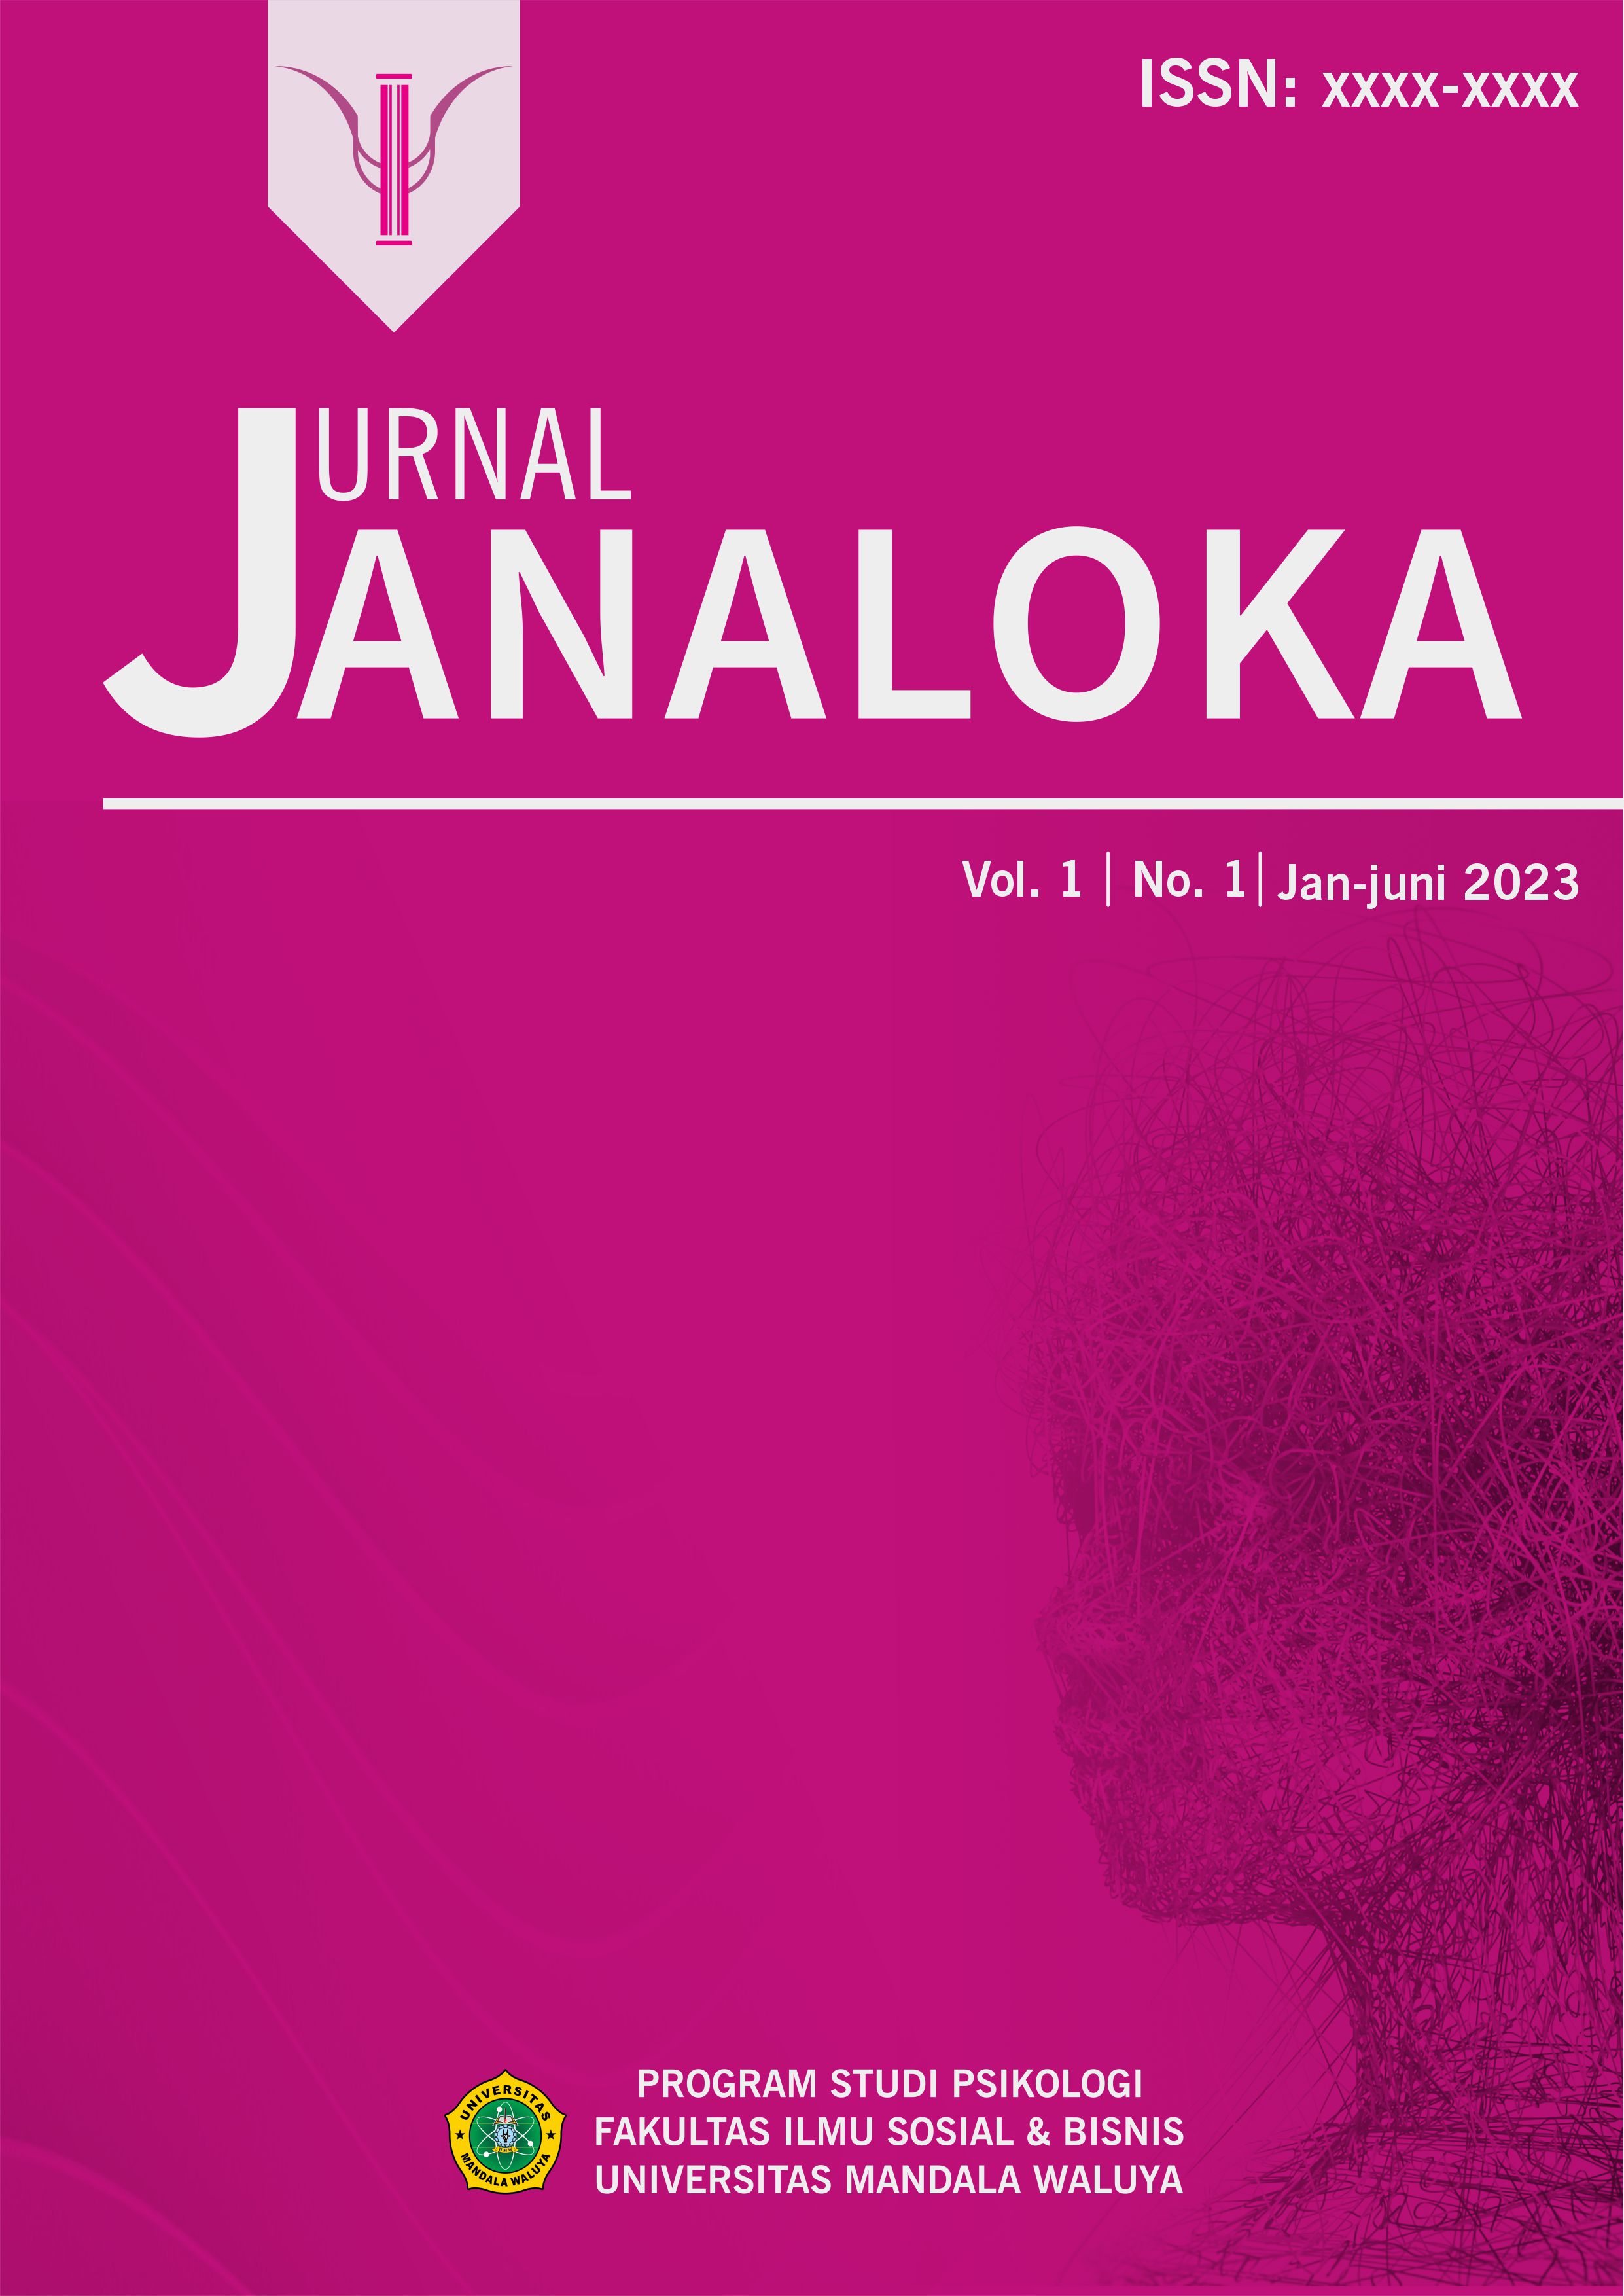 					View Vol. 1 No. 1 (2023): Jurnal Janaloka
				